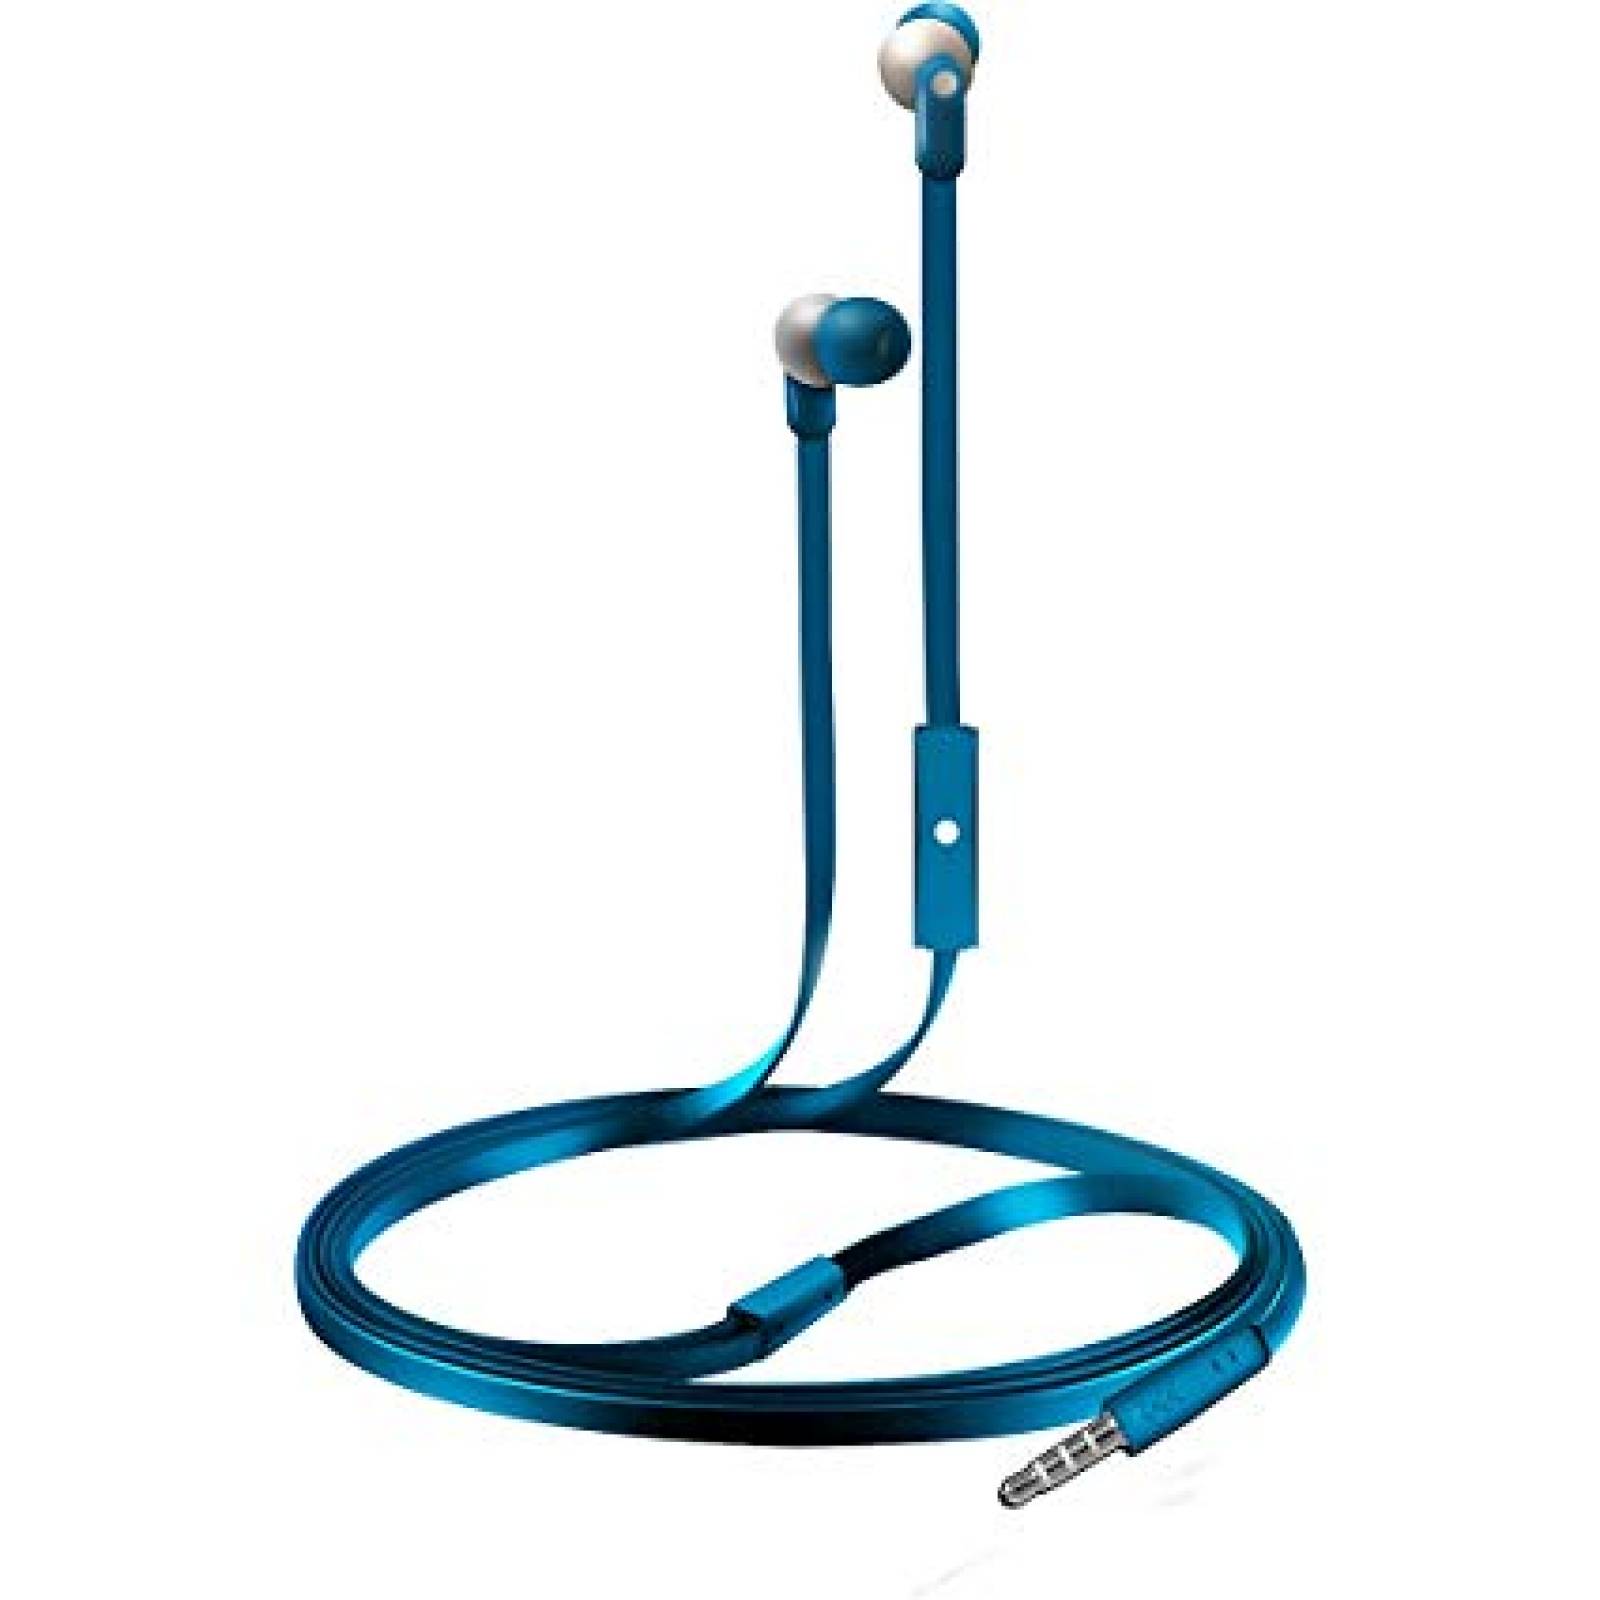 Audifonos Coby cable plano con microfono color azul